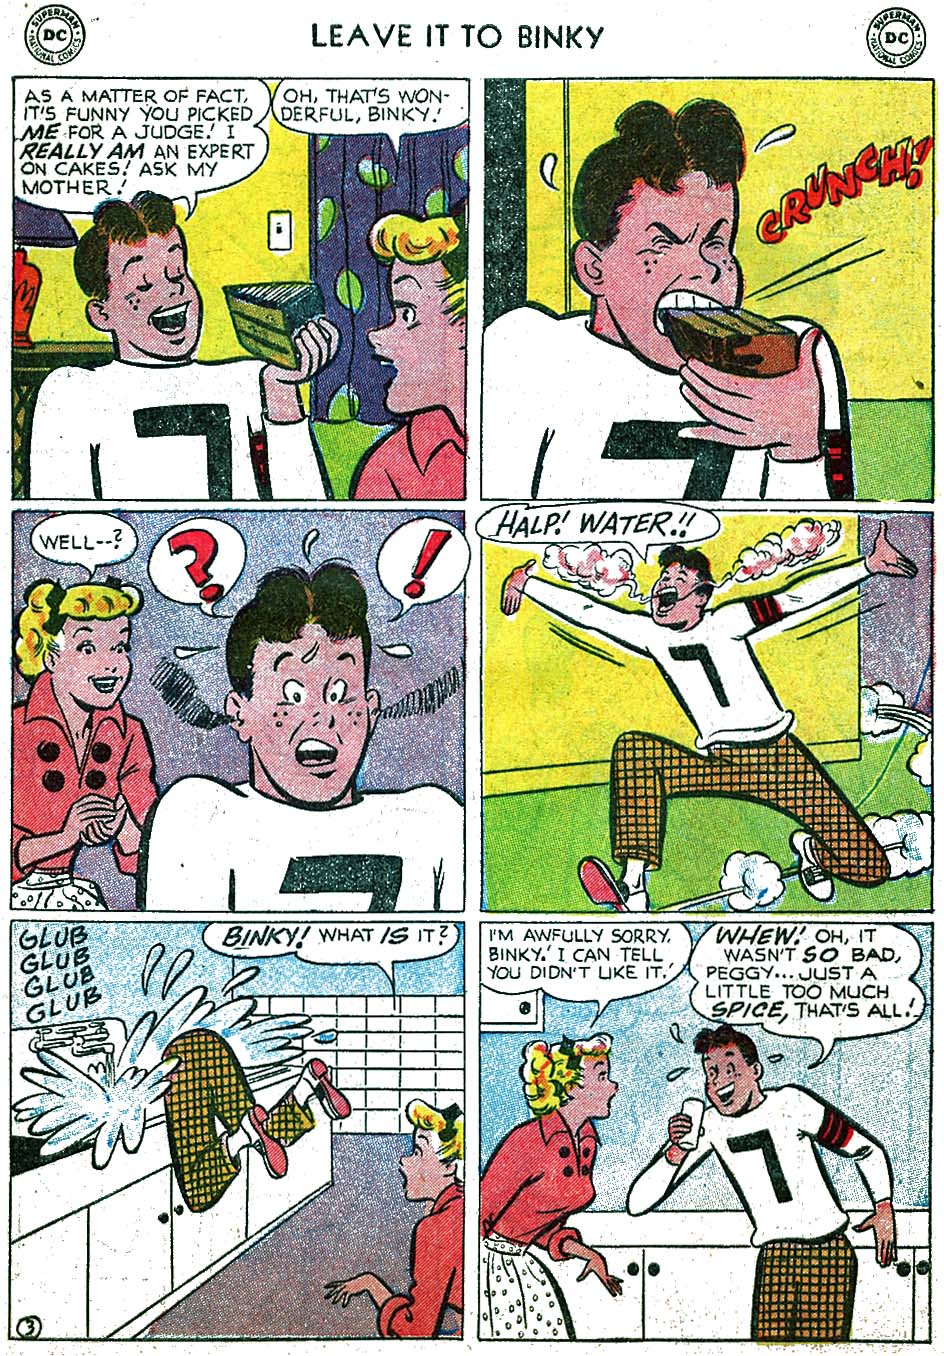 Read online Leave it to Binky comic -  Issue #43 - 5